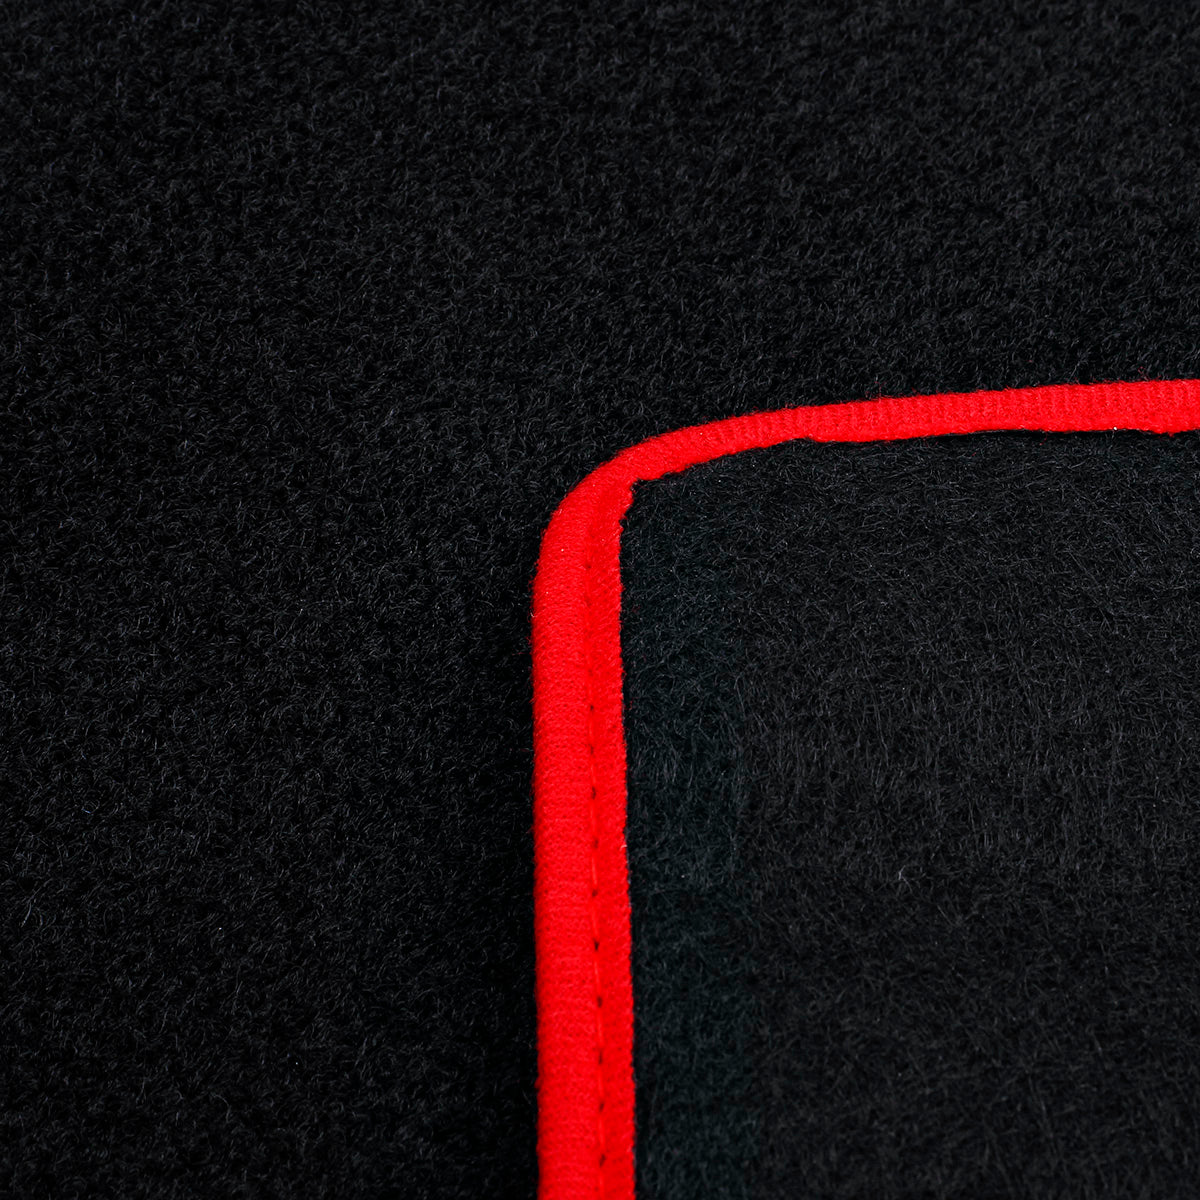 Arc Wrapped Tightly Black Dash Board Mat For Toyota Corolla 2019 - 2020 - Auto GoShop